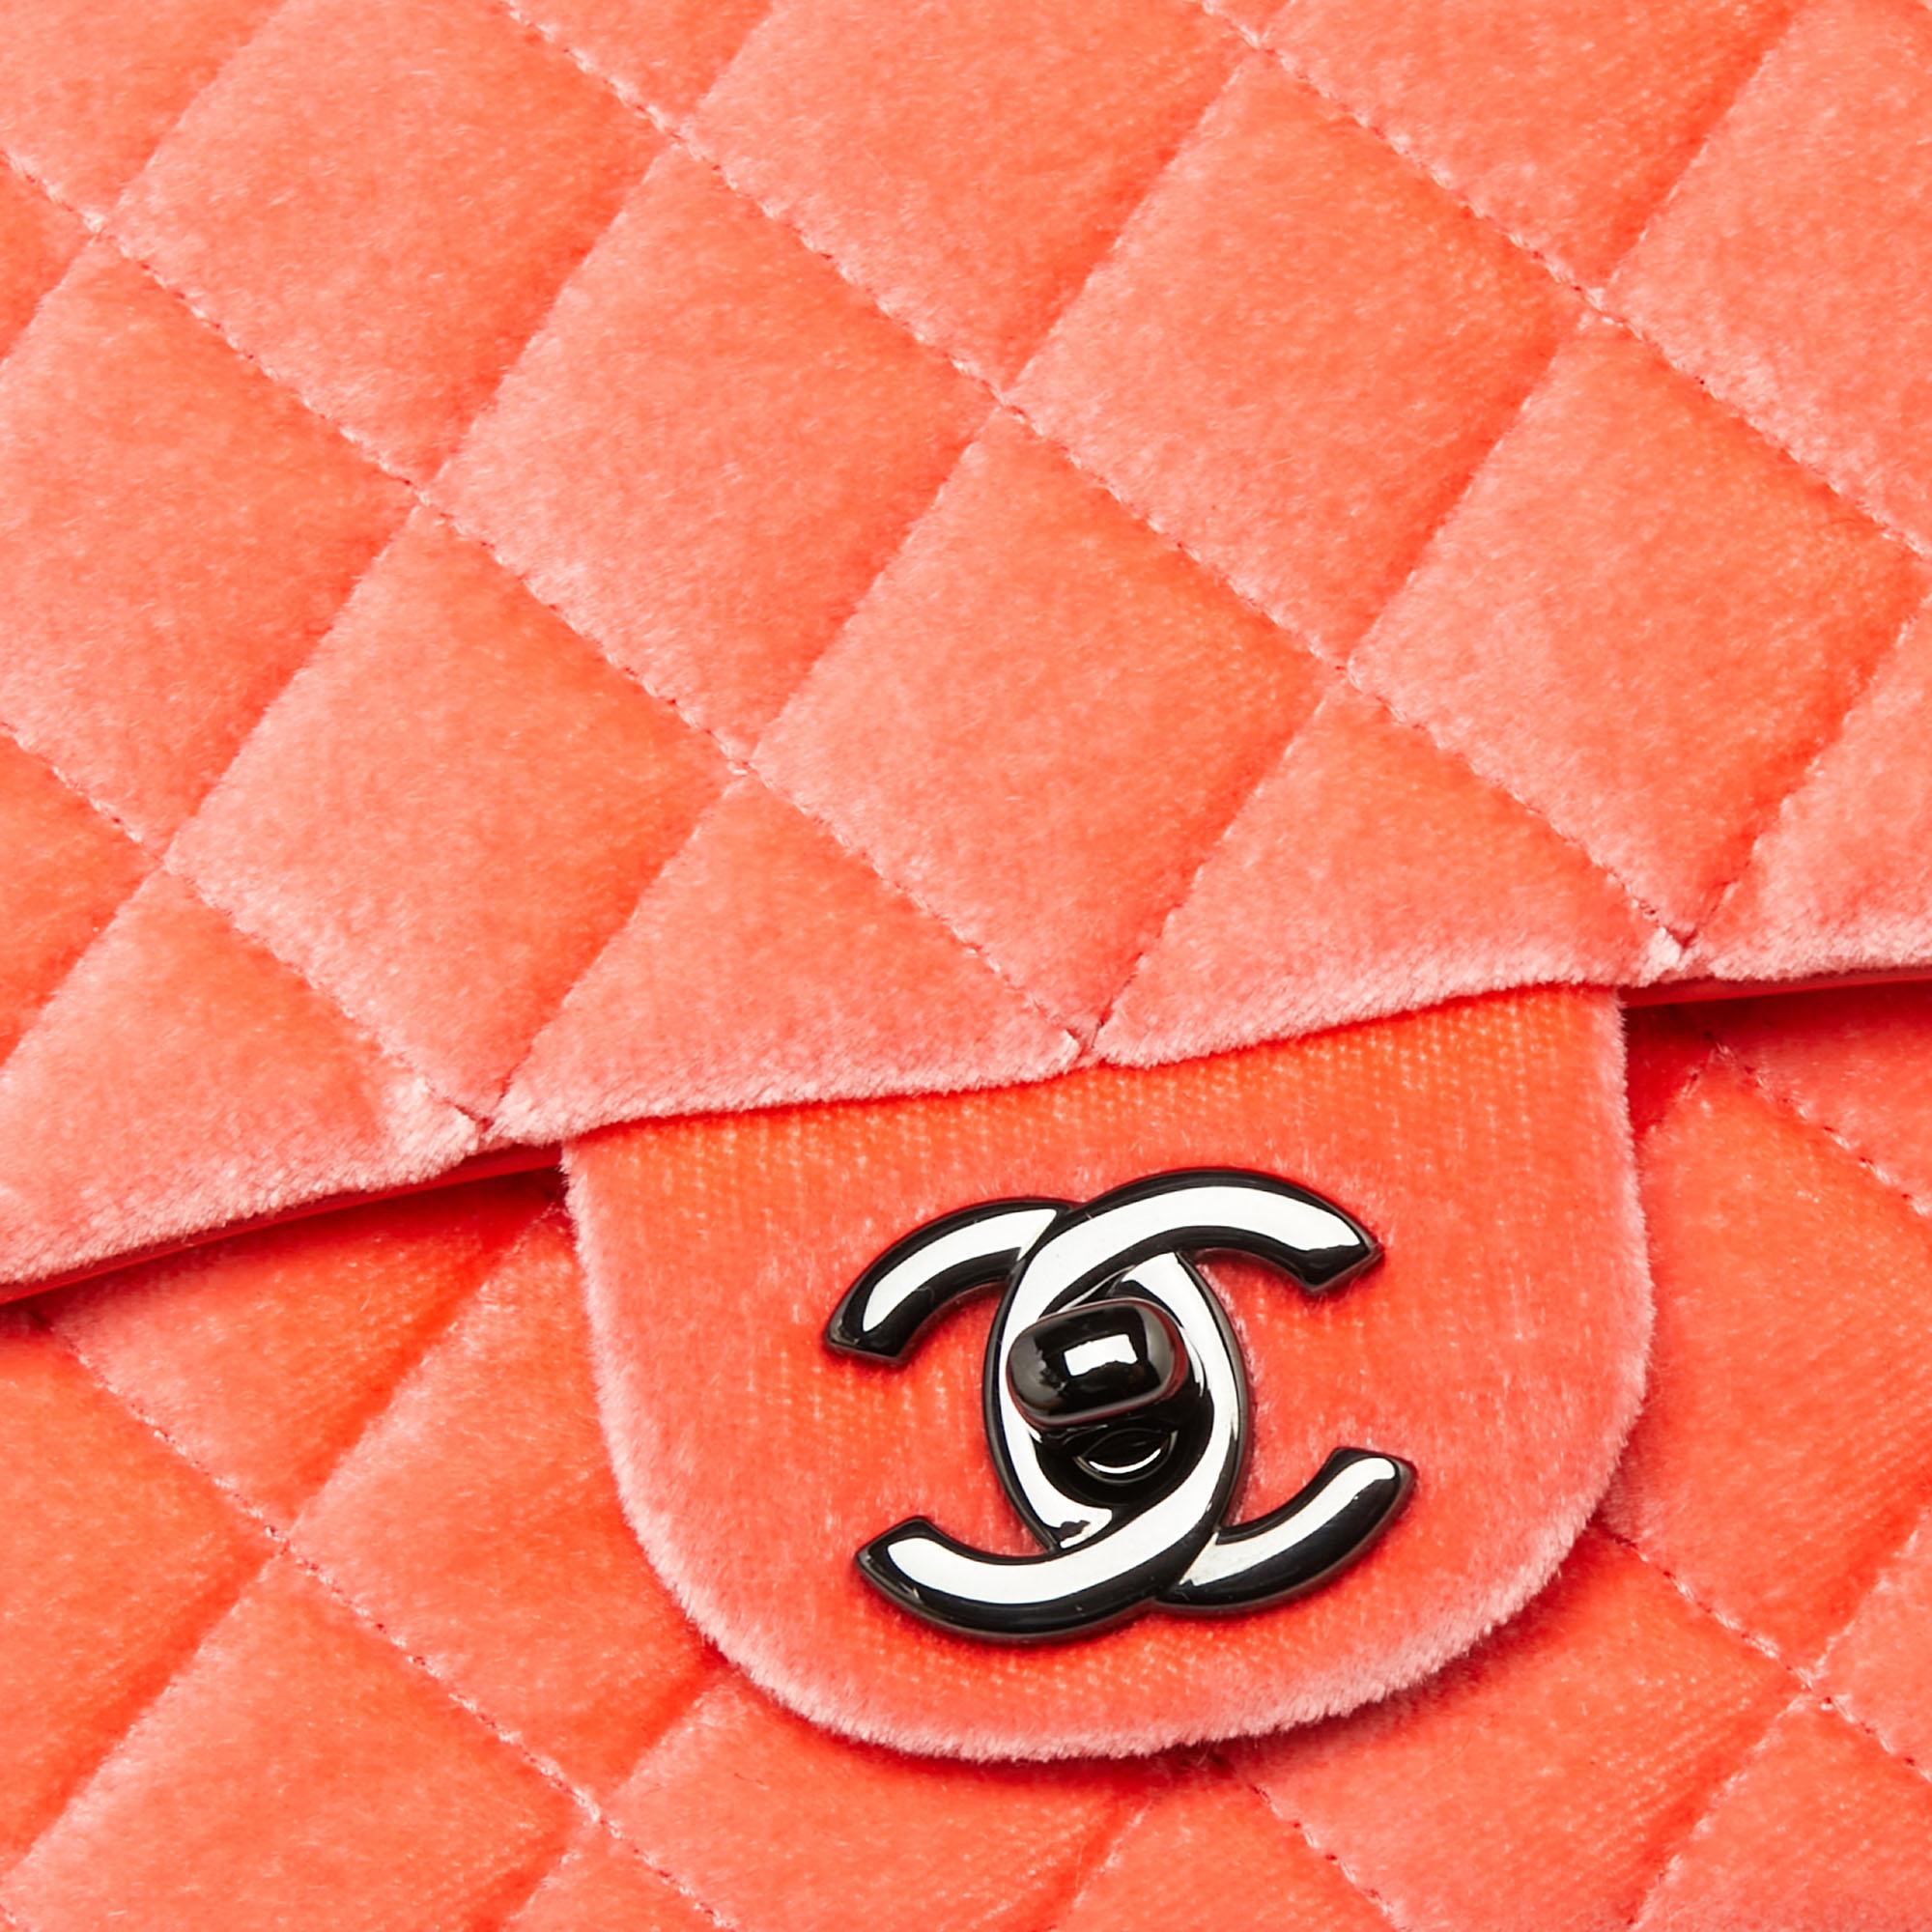 Orange Chanel Coral Velvet New Mini Classic Flap Bag